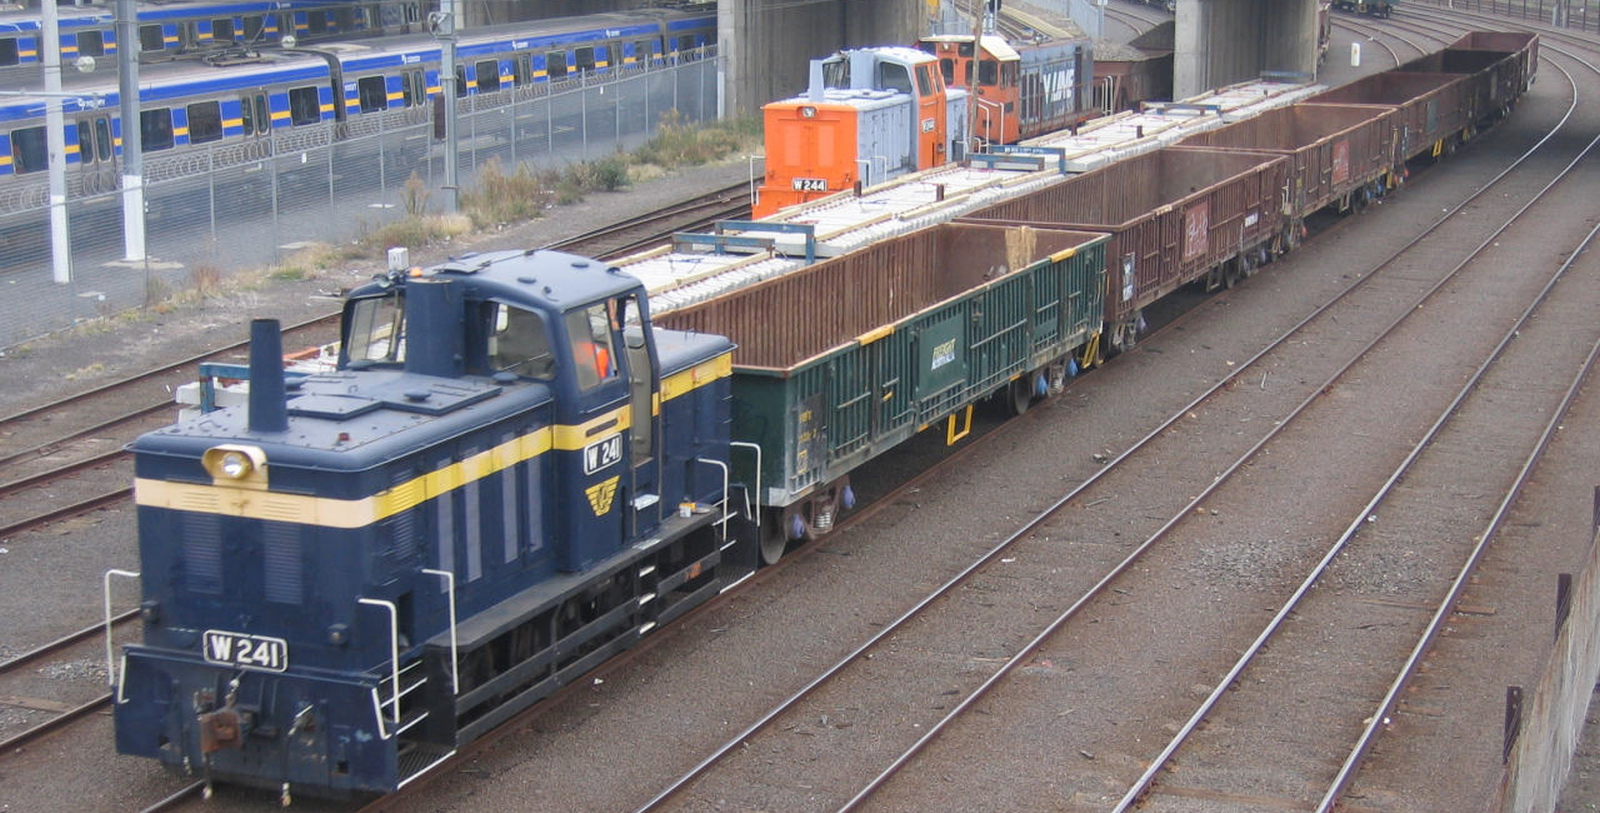 W 241 of the operator “El Zorro” in April 2006 in front of a work train in Melbourne